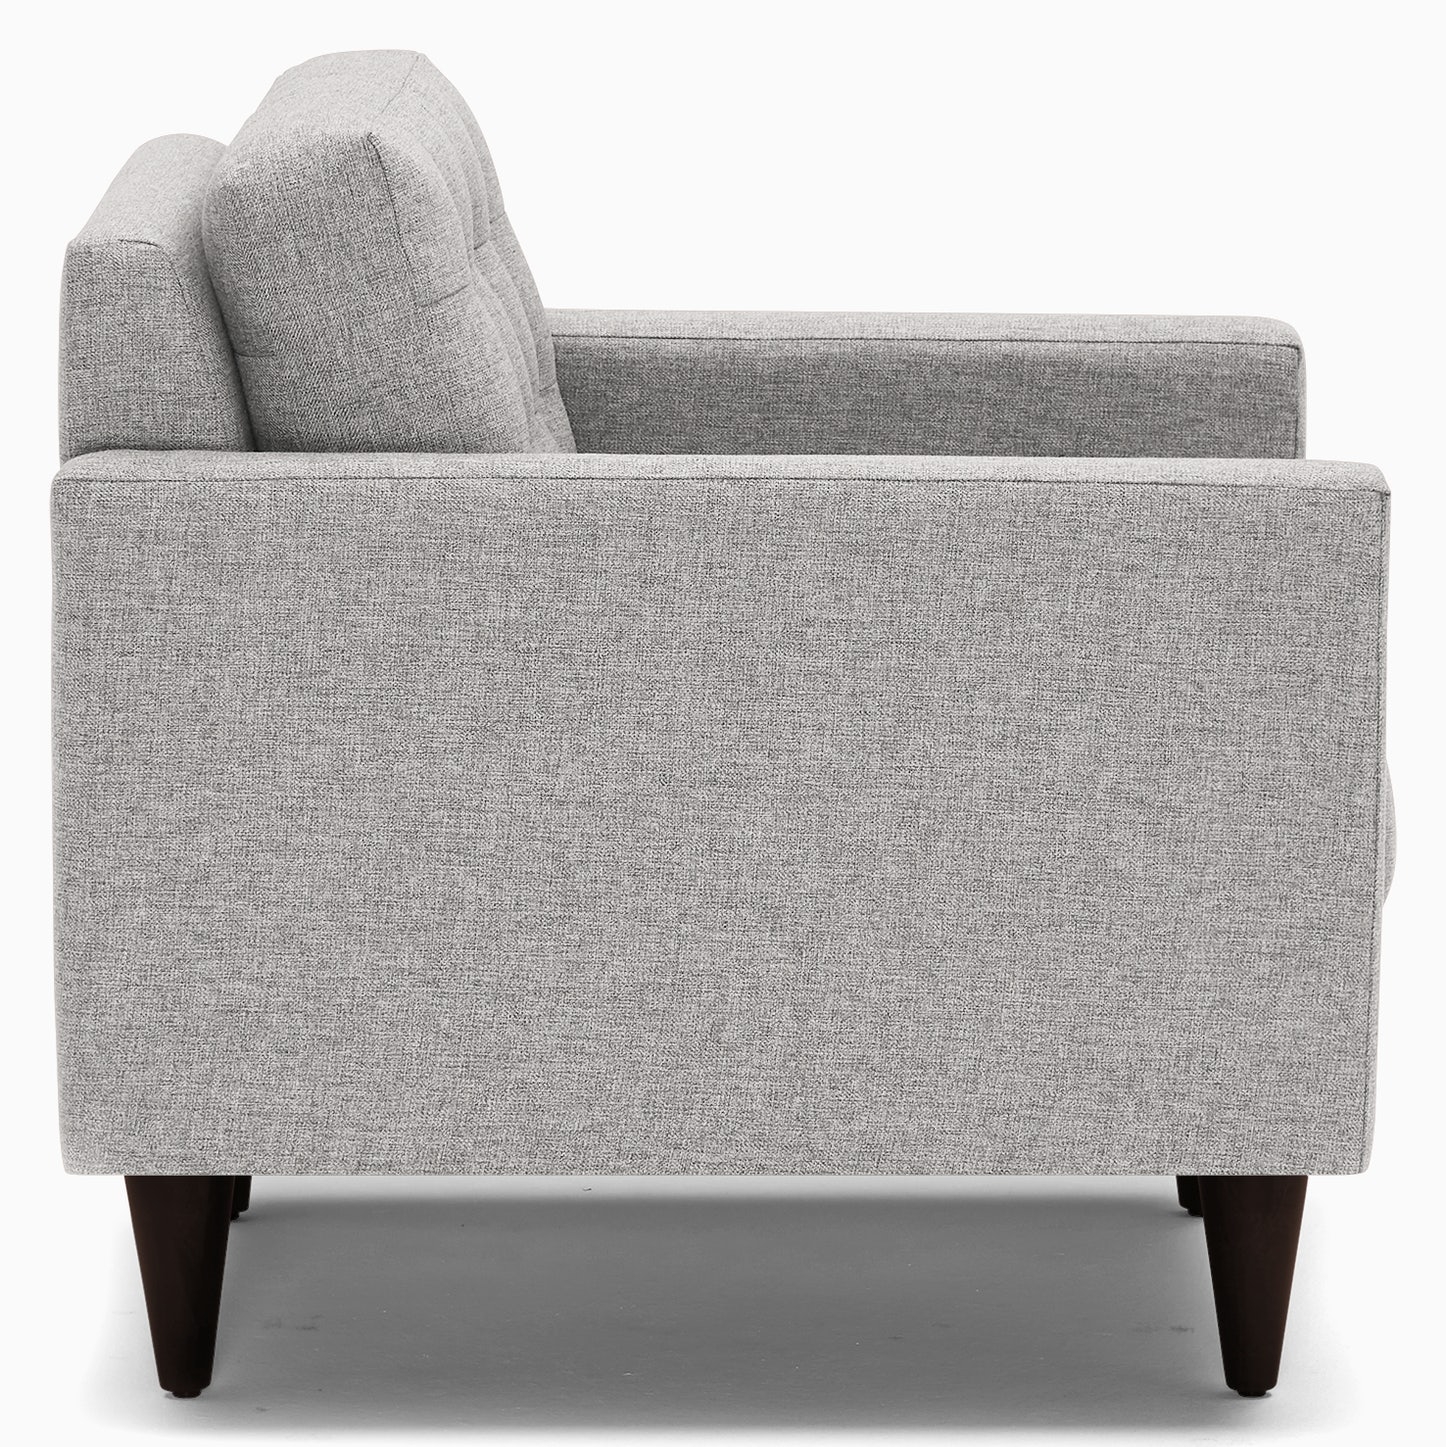 Gray Eliot Mid Century Modern Apartment Chair - Sunbrella Premier Fog - Coffee Bean - Image 1